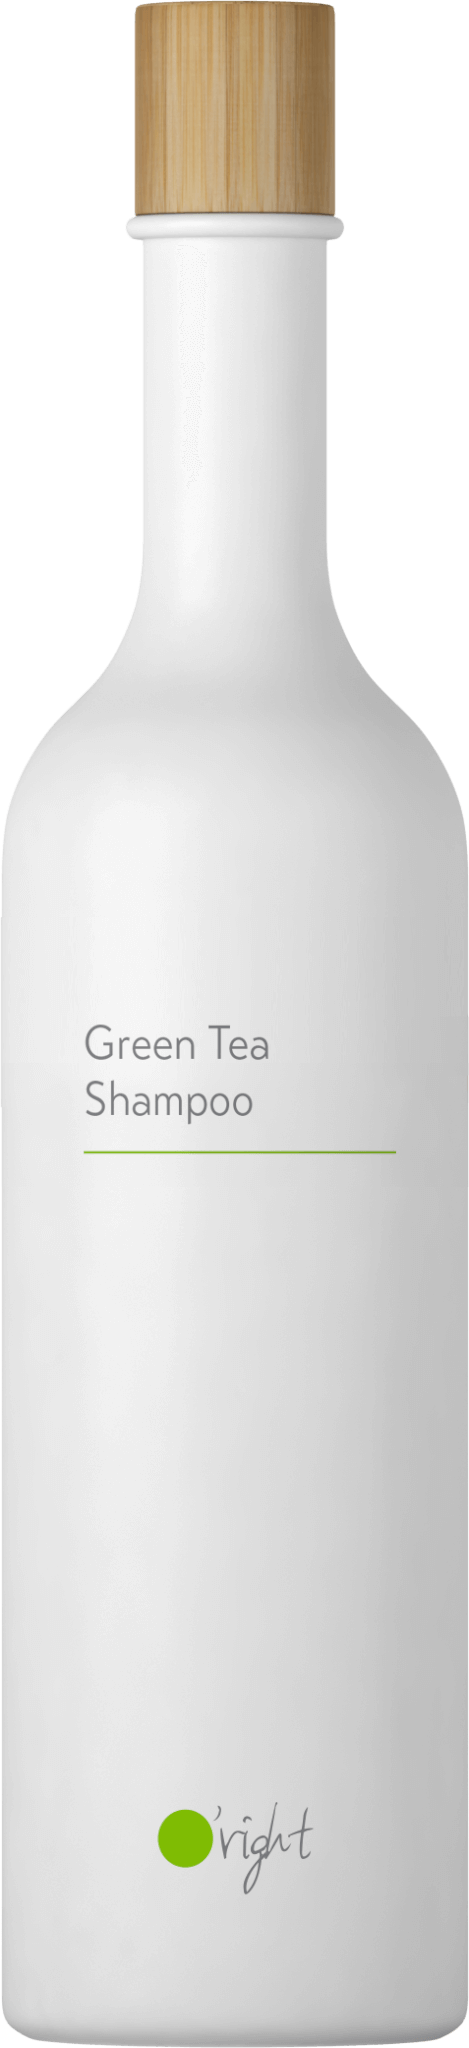 Green Tea Shampoo 400ml 2020